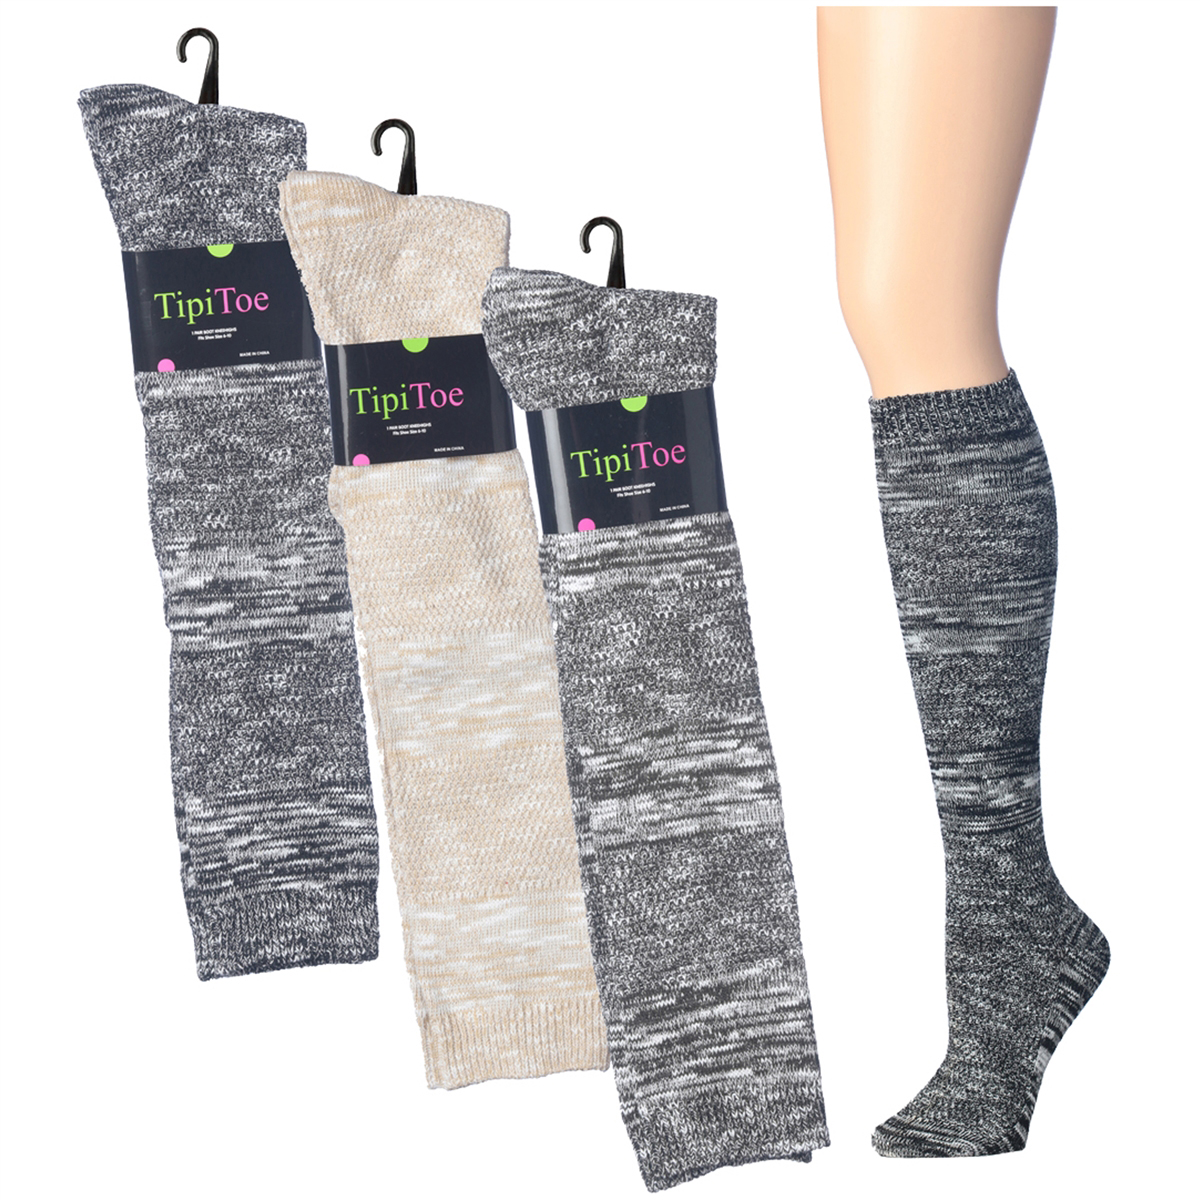 Harve' benard footies black 2pk-3 pairs per pk sock size 9-11 brand new 